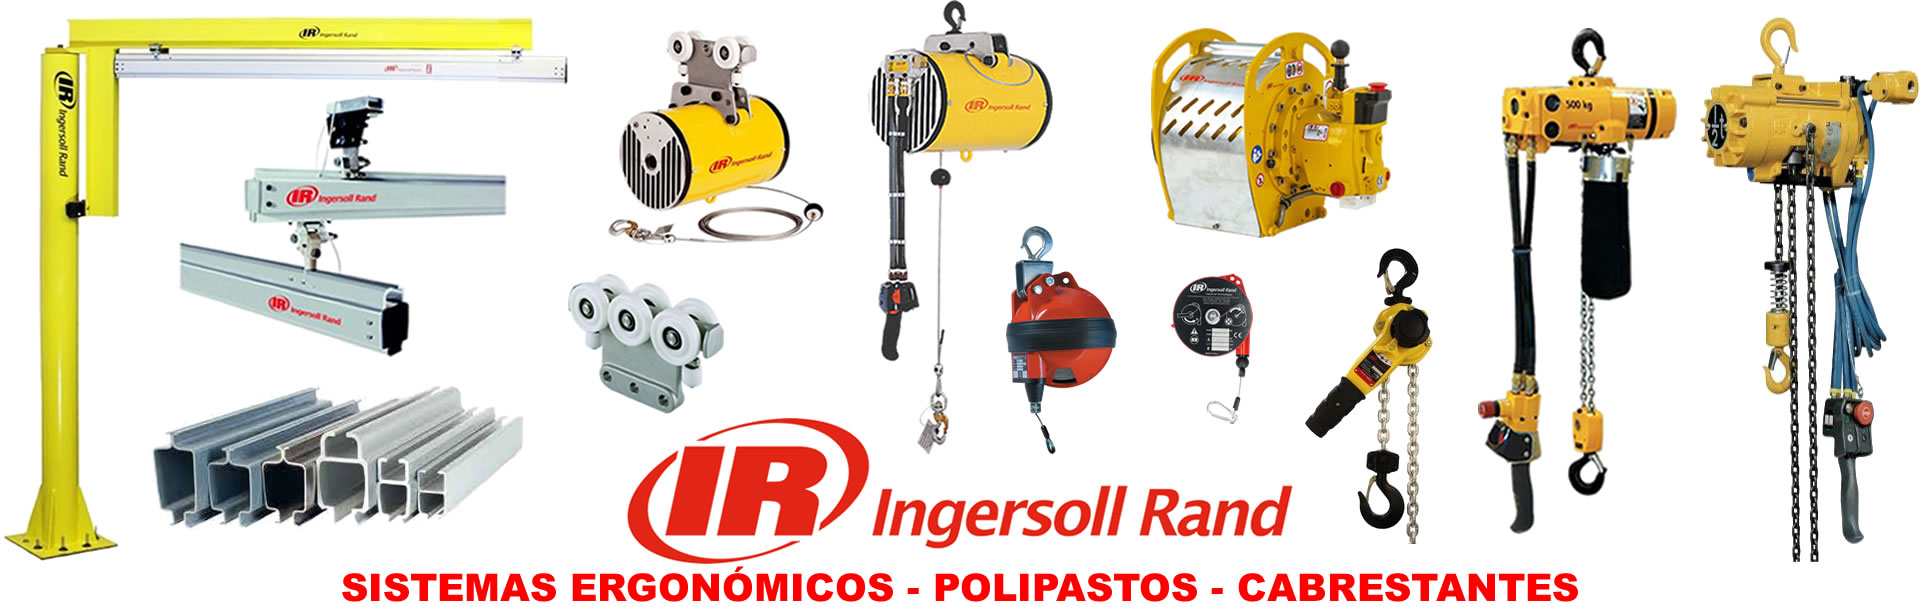 alcaner_ingersoll-rand_soluciones-industria-automación_equipamento_maquinaria_servicio-tecnico_distribuidor-oficial-ingersoll-rand_madrid-espana_banner-5-ir-ergonomia-polipastos